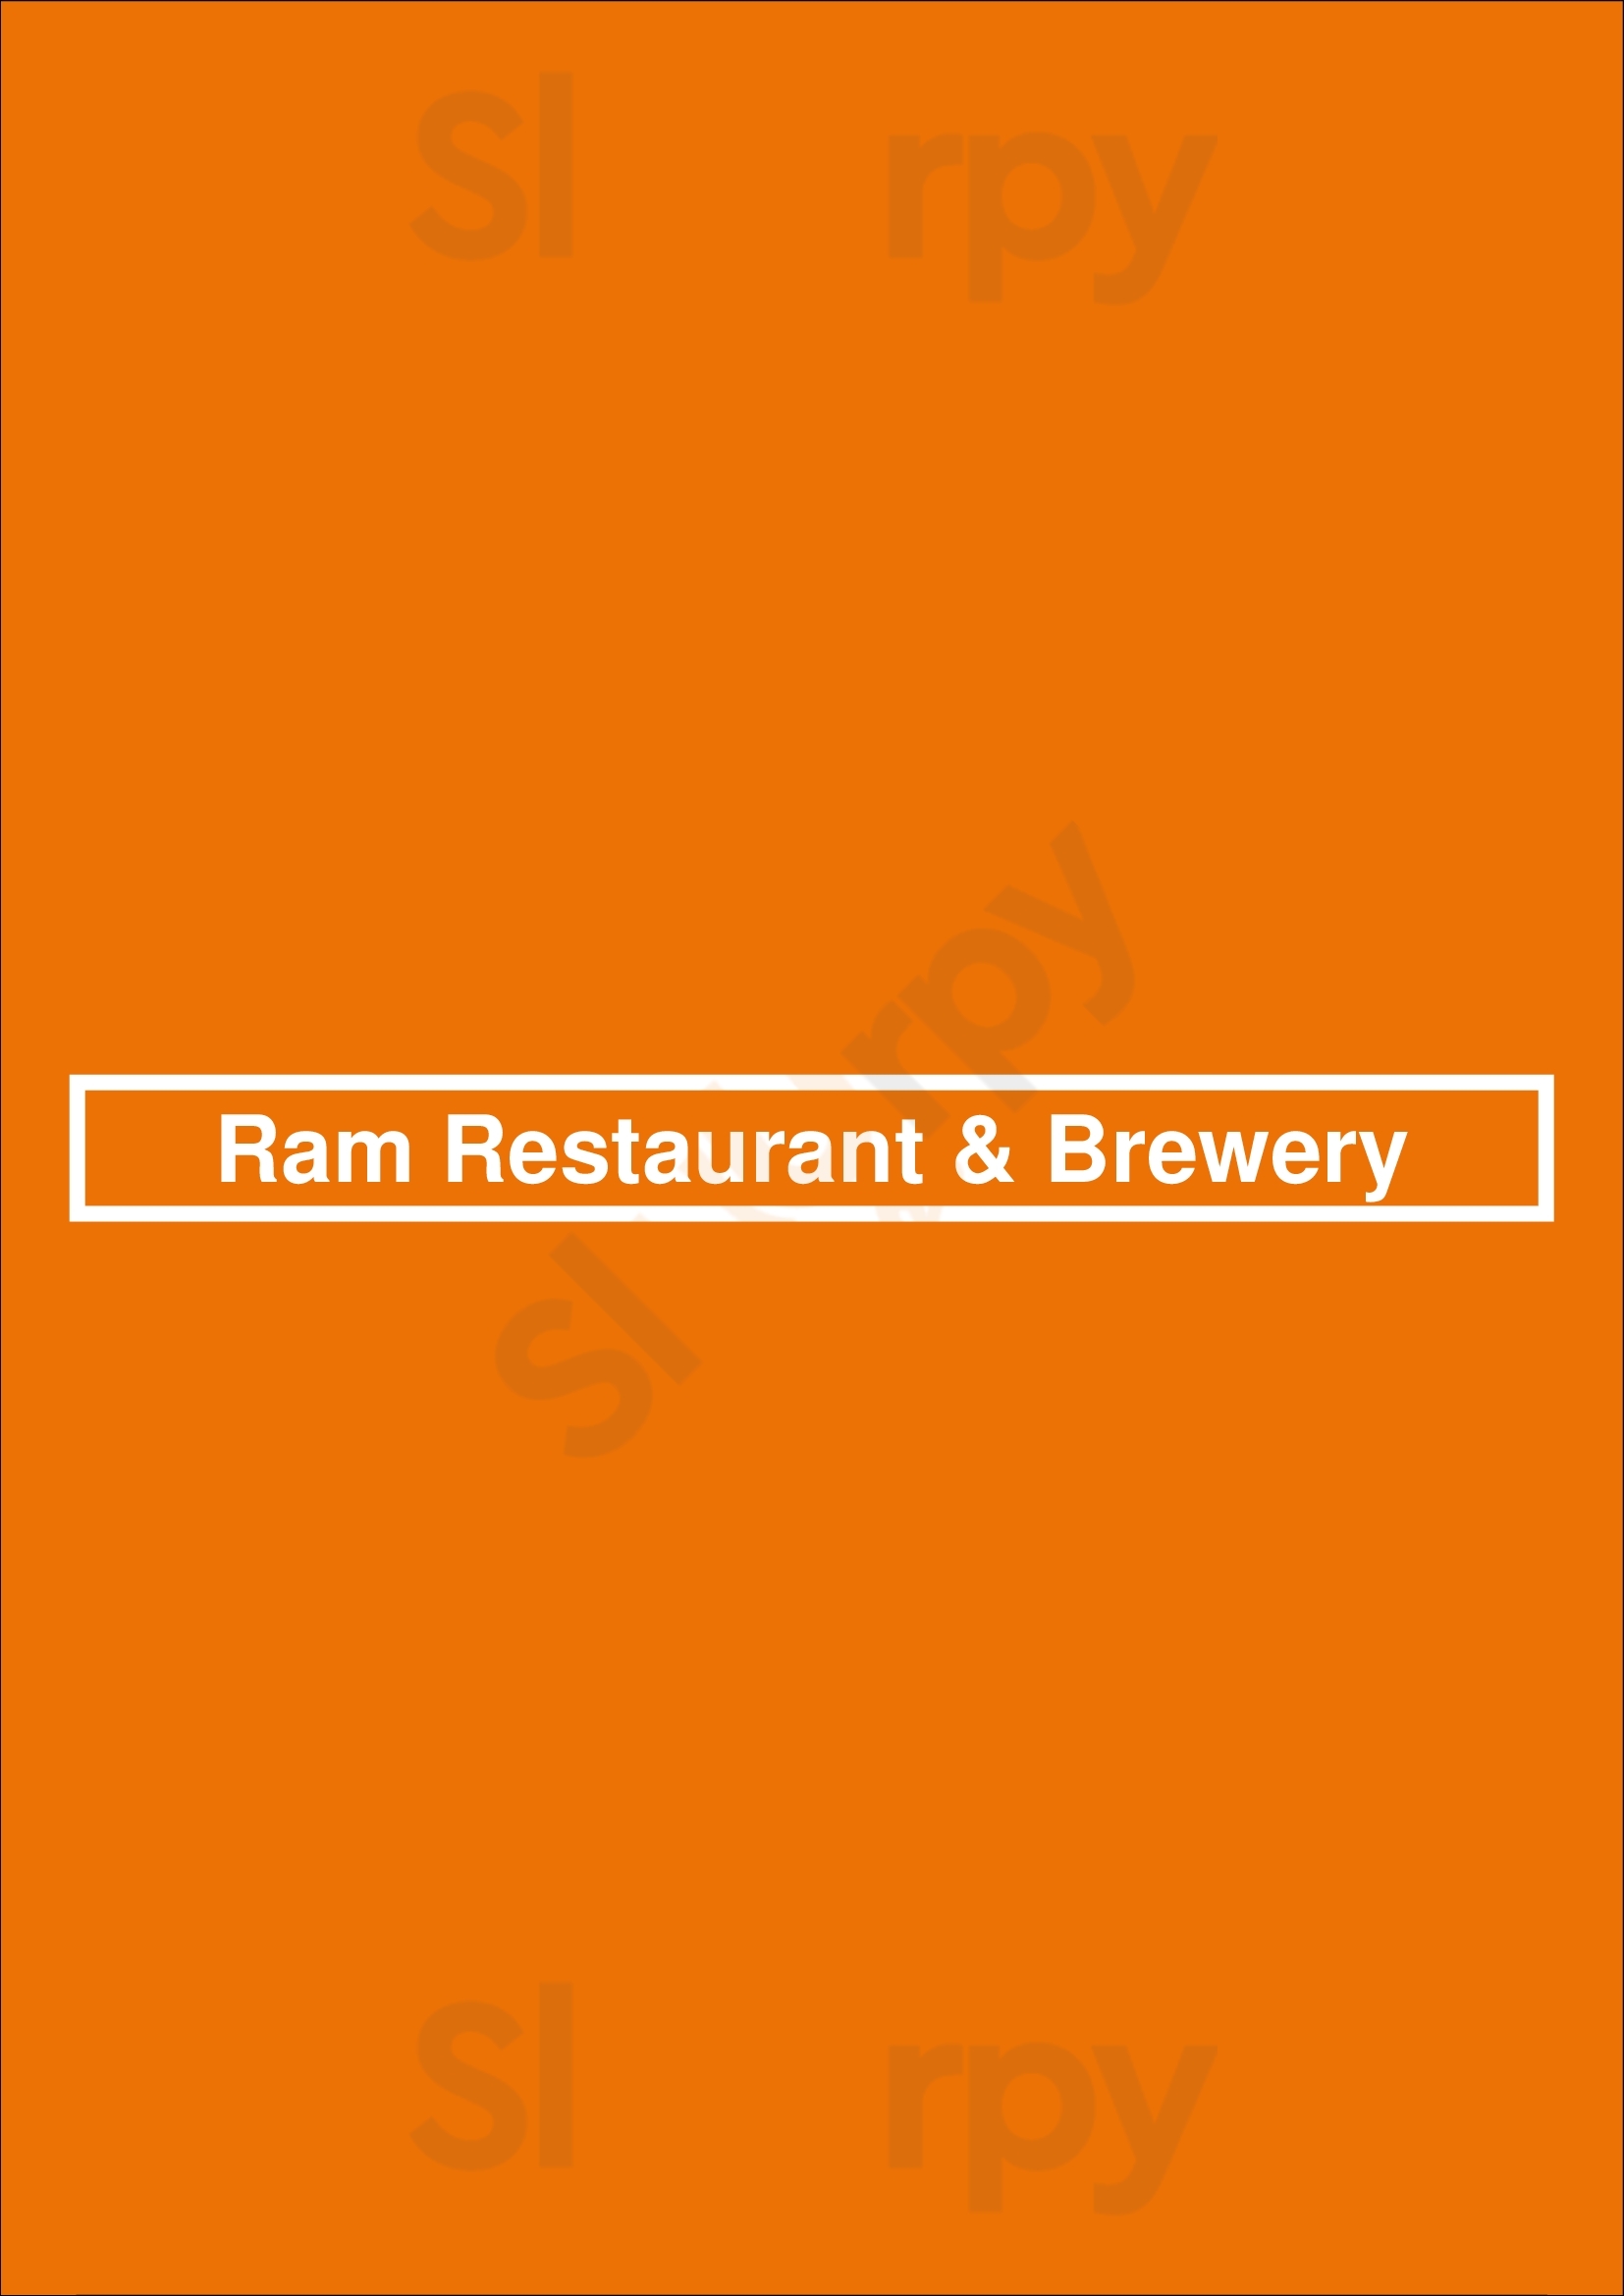 Ram Restaurant & Brewery Indianapolis Menu - 1